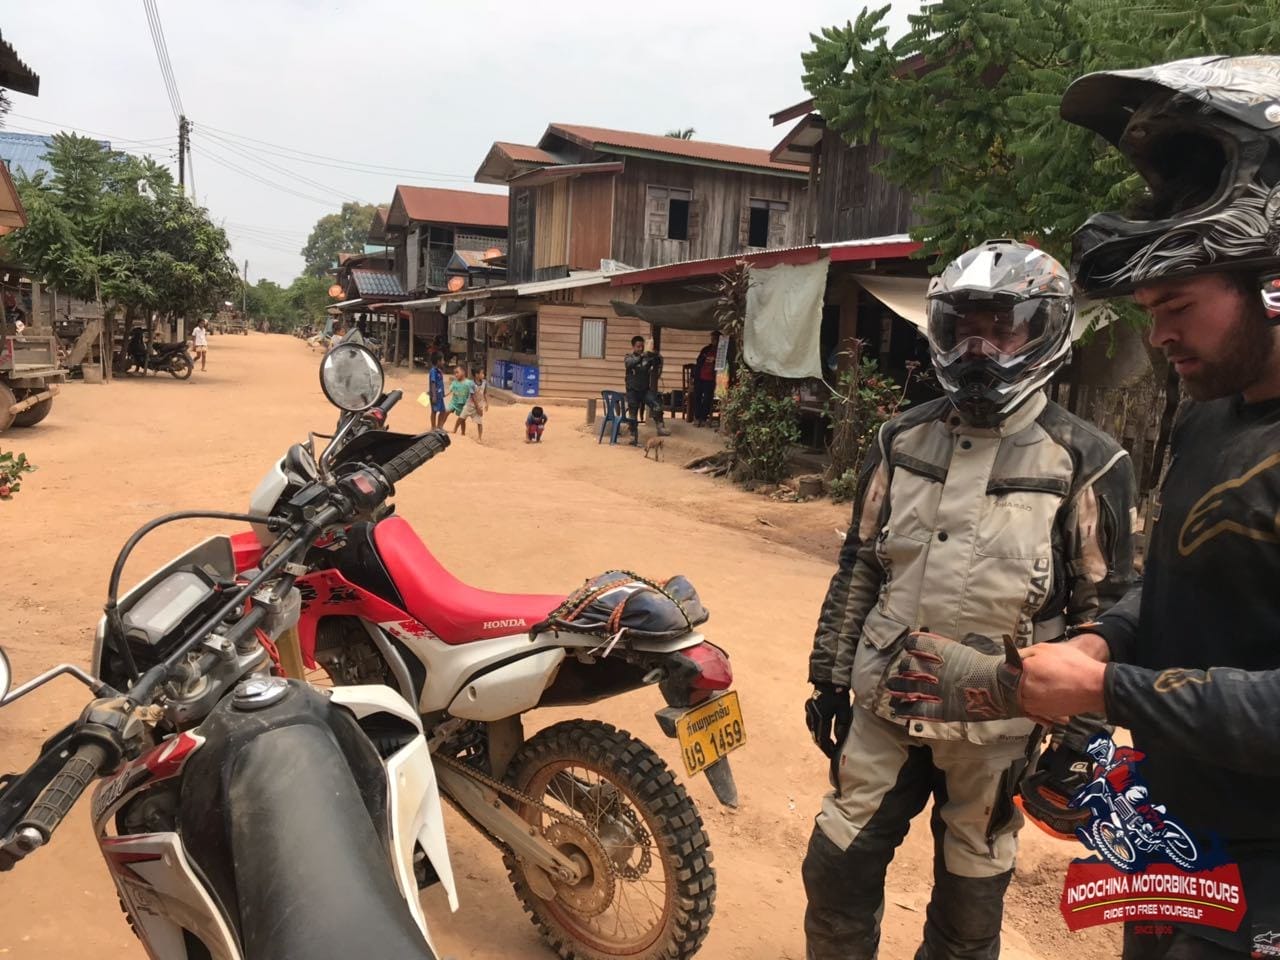 Laos Motorbike Tours to Vietnam 33 - Brilliant Luang Prabang Off-road Motorbike Tour to Vang Vieng And Phoukone